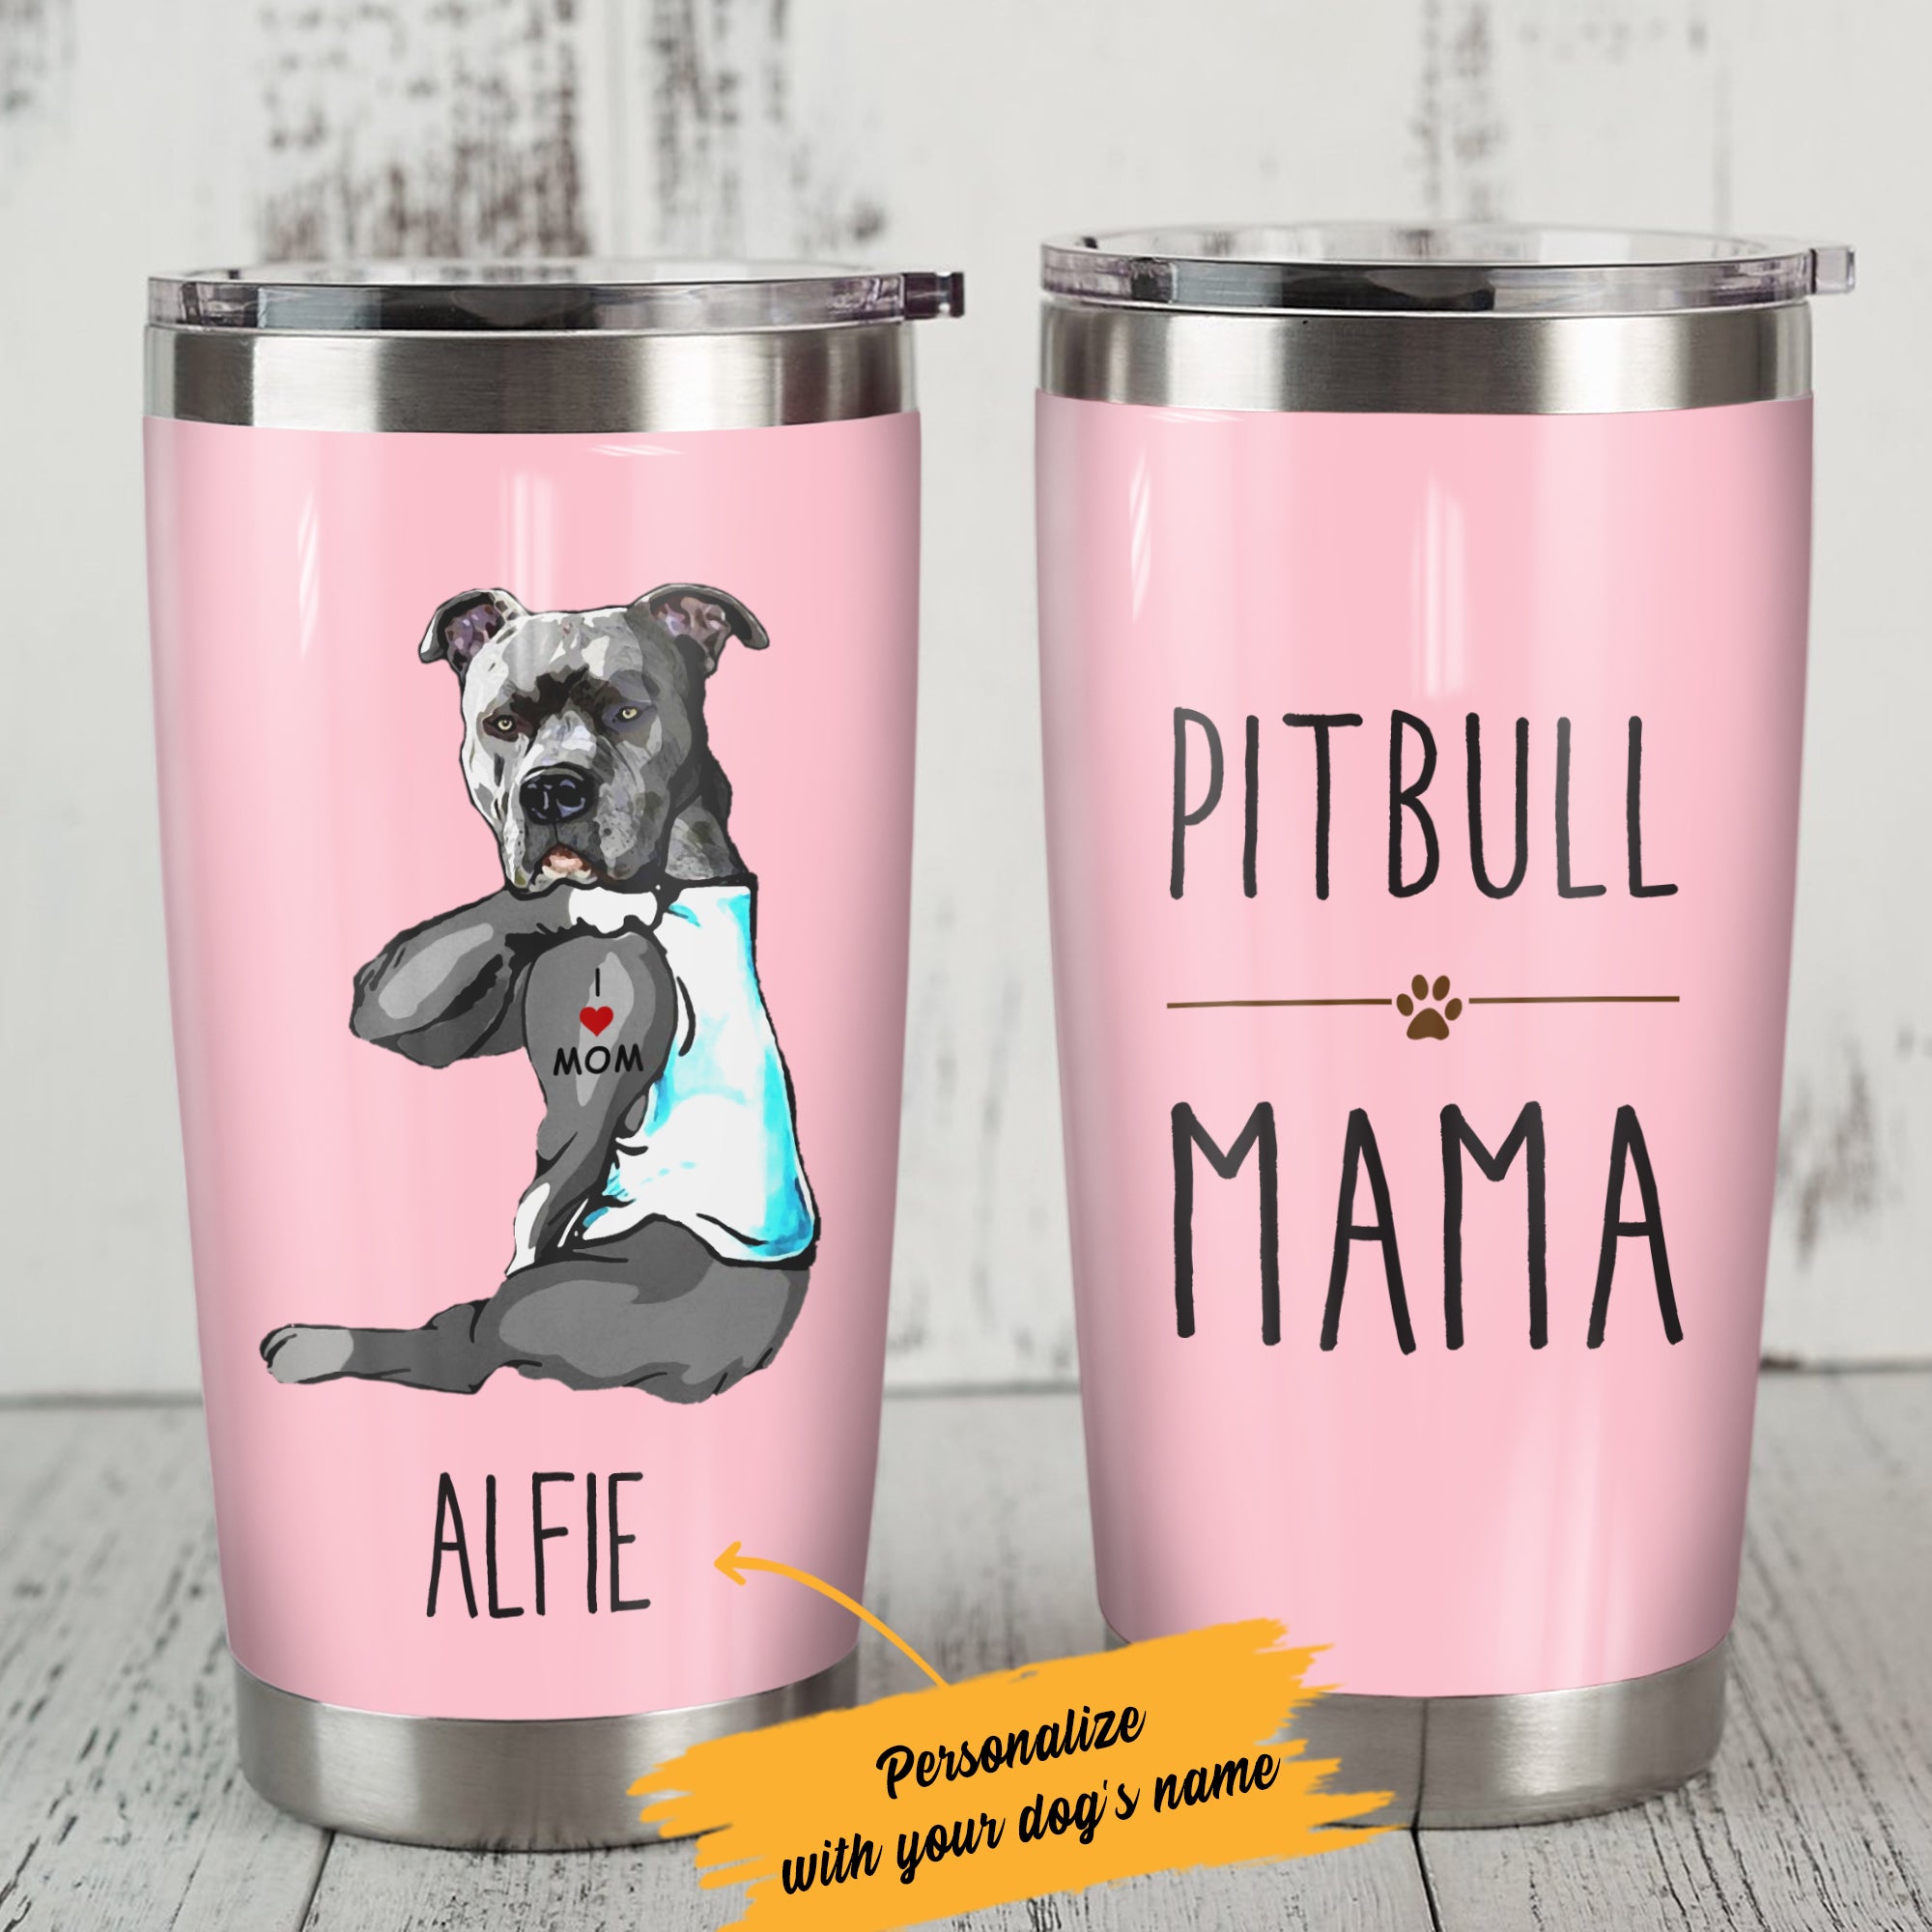 Personalized Pitbull Dog I Love Mom Steel Tumbler S SMY202 81O36